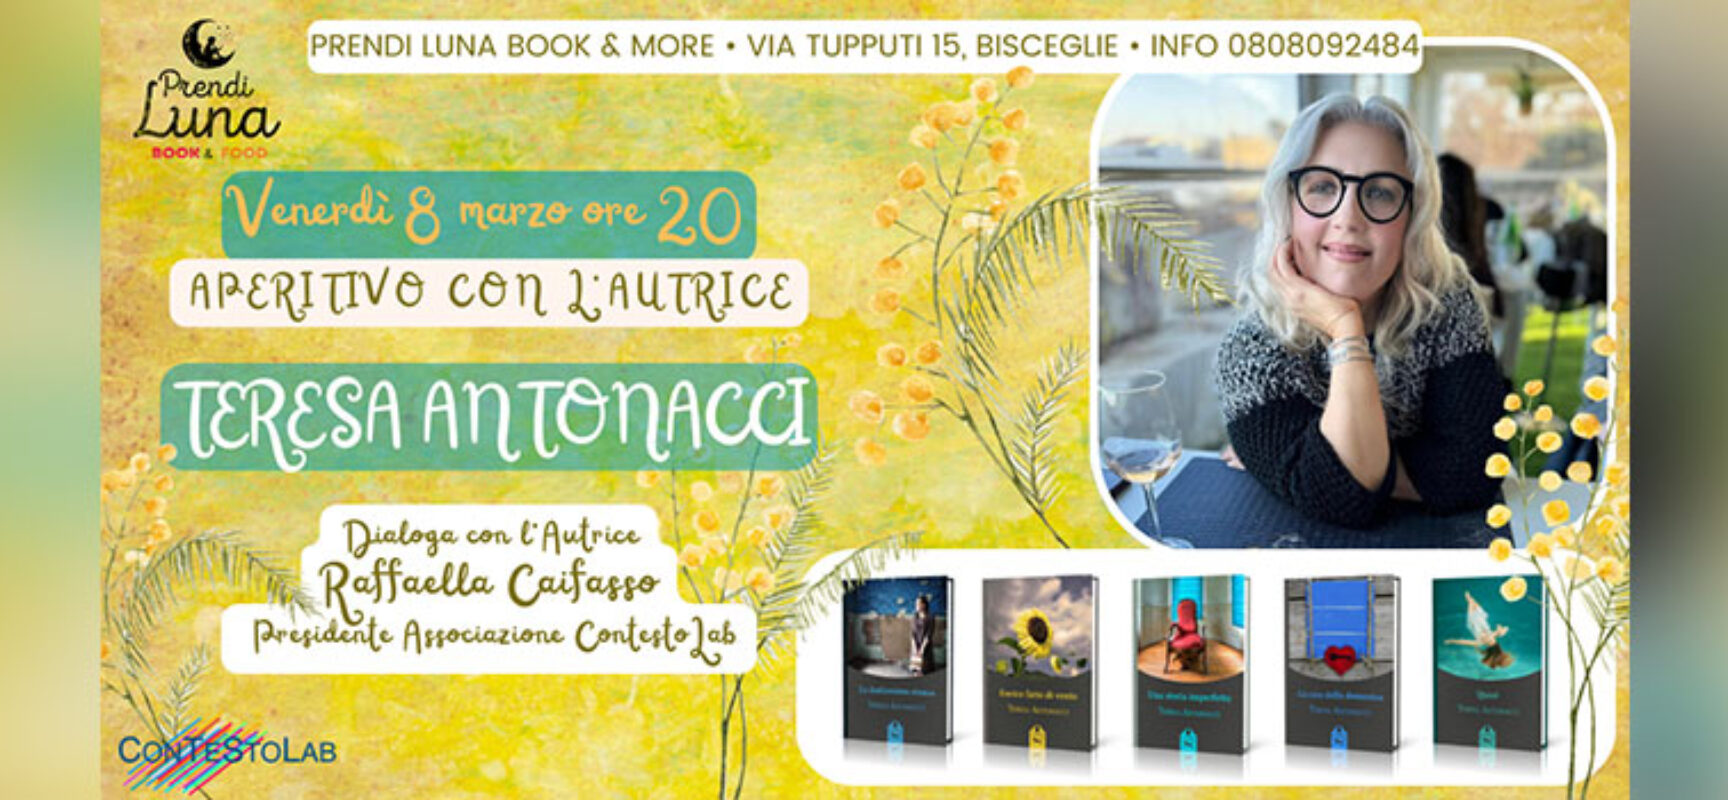 Teresa Antonacci ospite al Prendi Luna book & more